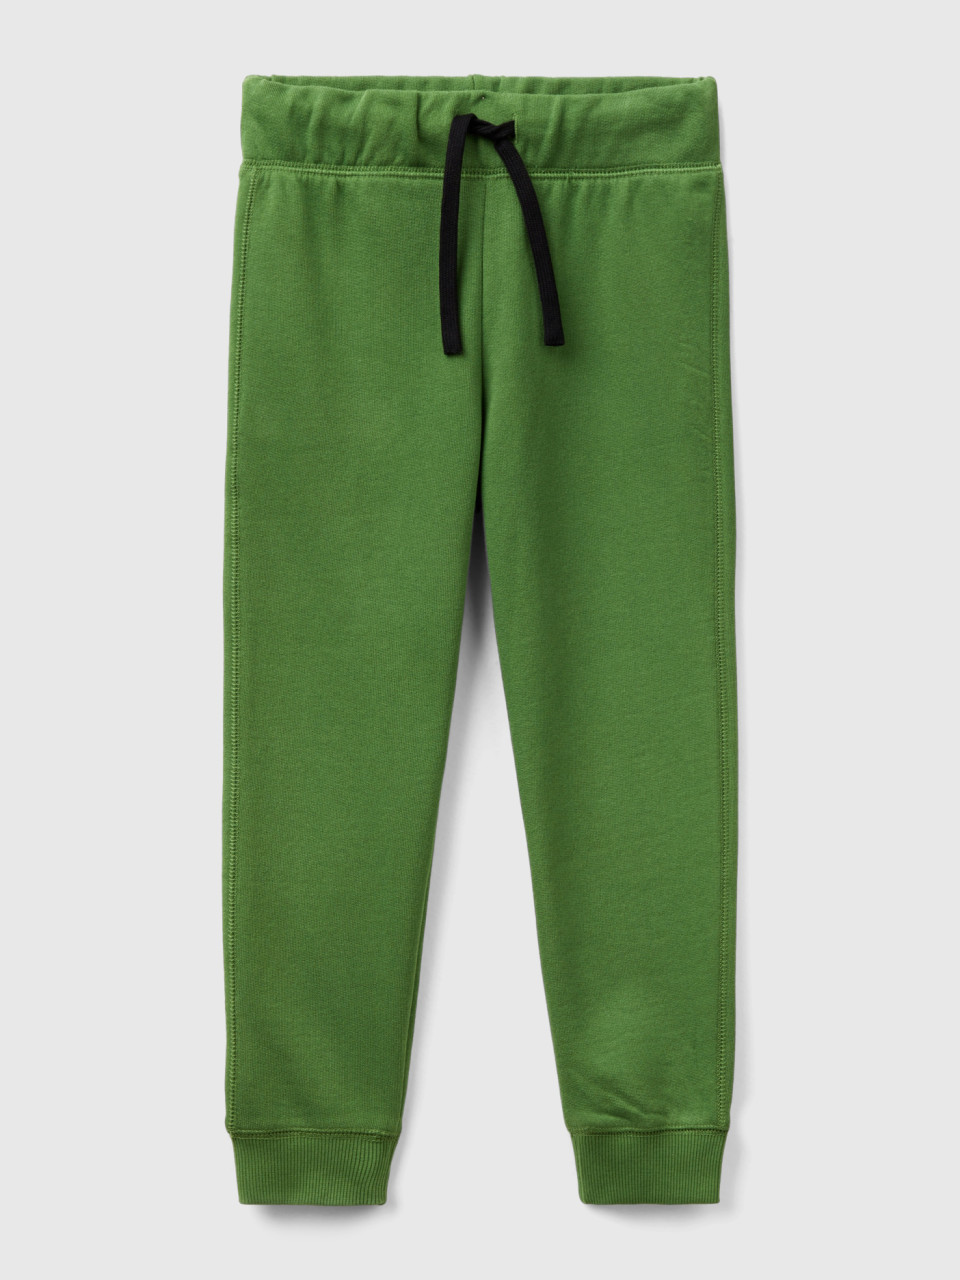 Benetton, 100% Cotton Sweatpants, Military Green, Kids